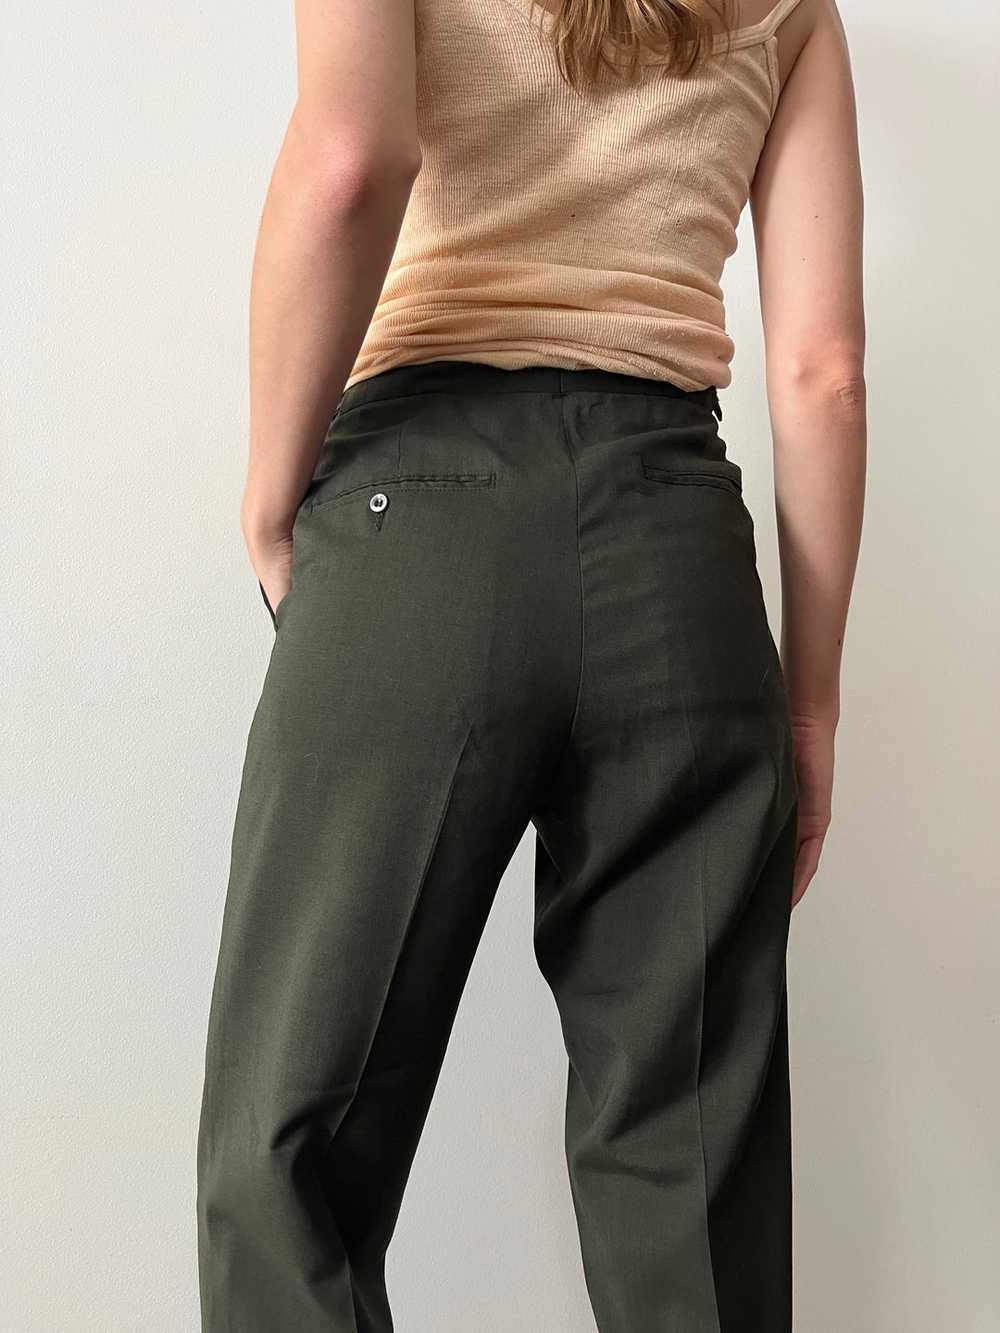 60s Green Sears Casual Pants - image 5